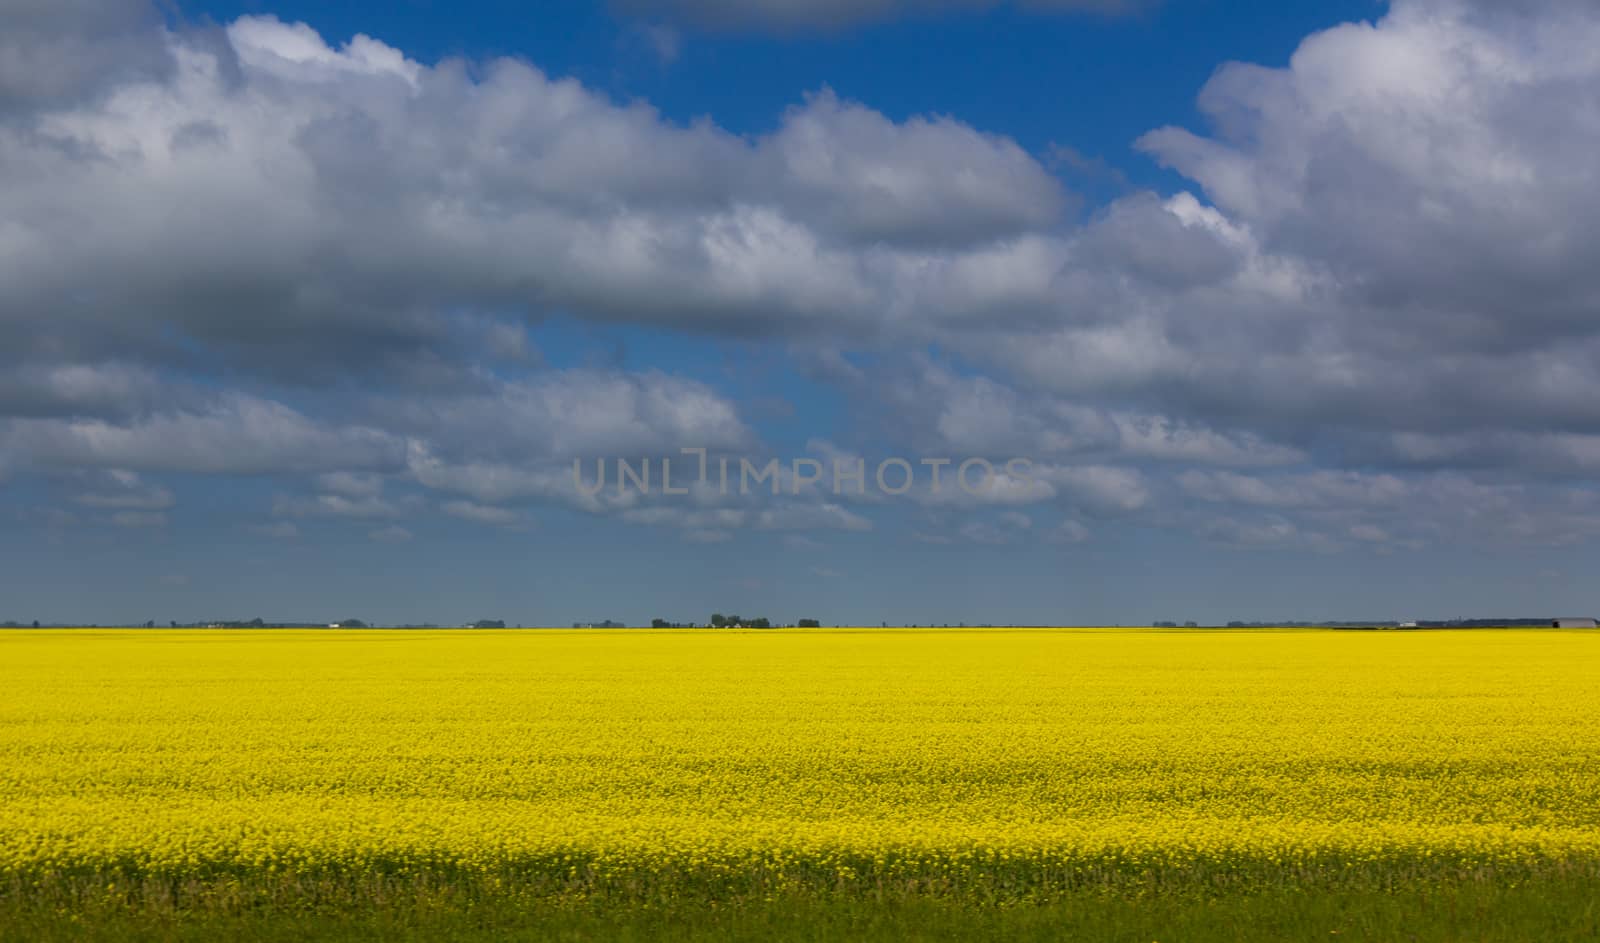 Clouds over wheat field Saskatchewan by 1shostak